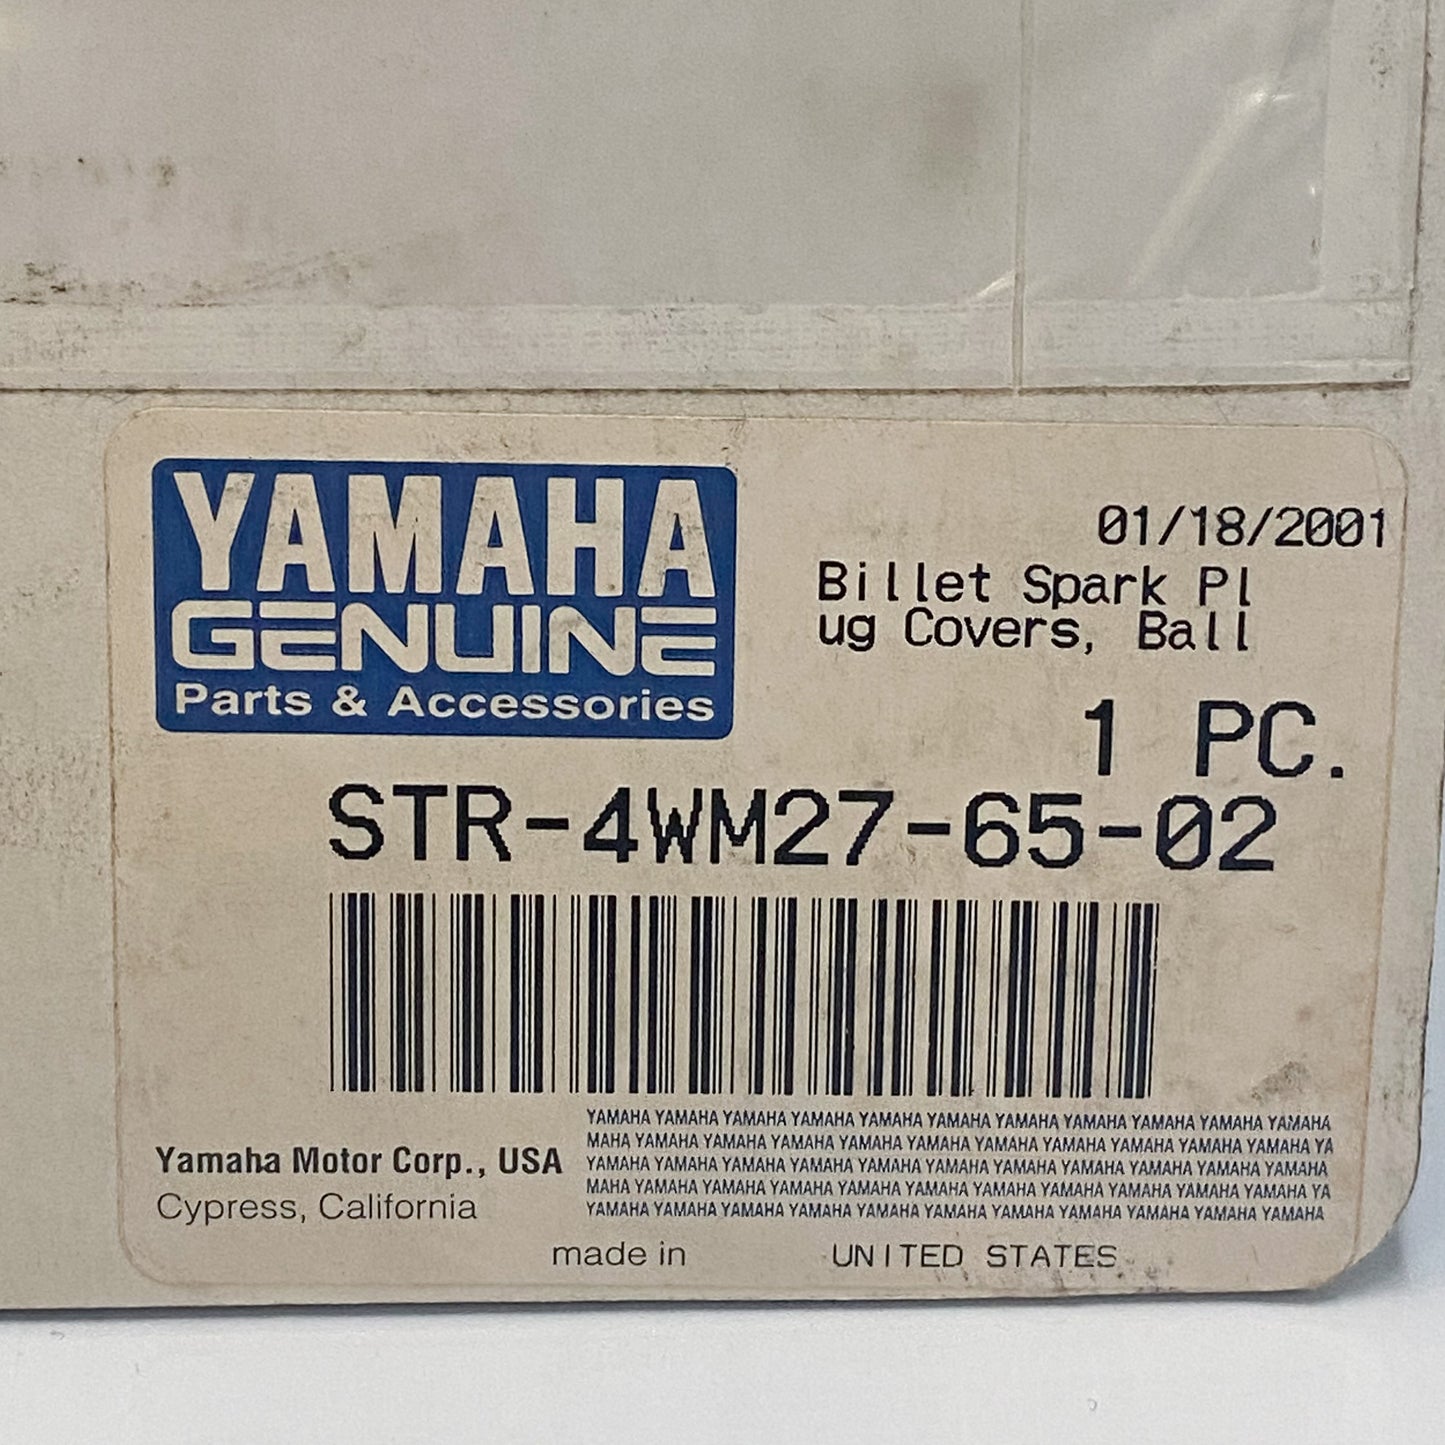 Yamaha Billet Spark Plug Covers STR-4WM27-65-02